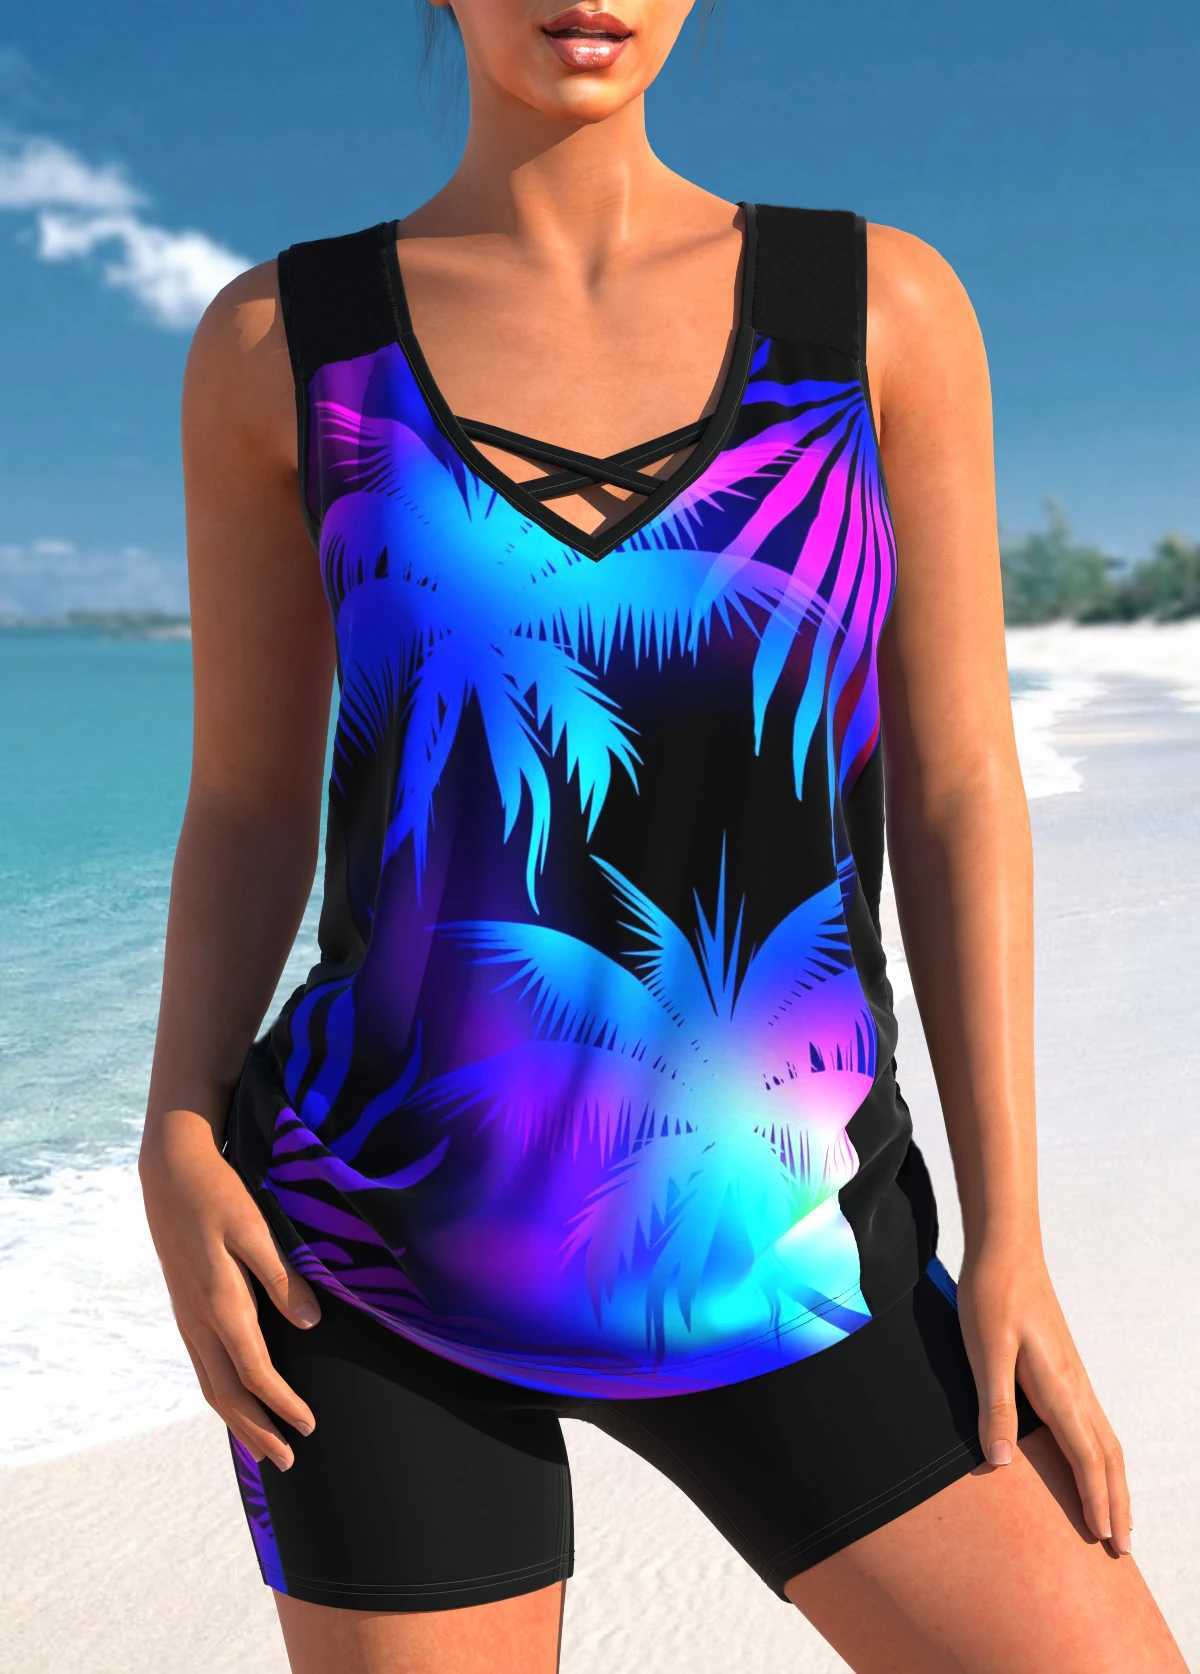 Swim Wear Summer Basic High Quality Bikini Push Up Beach Swimsuit Two Piece S-6xl Aquatic Sports 240311